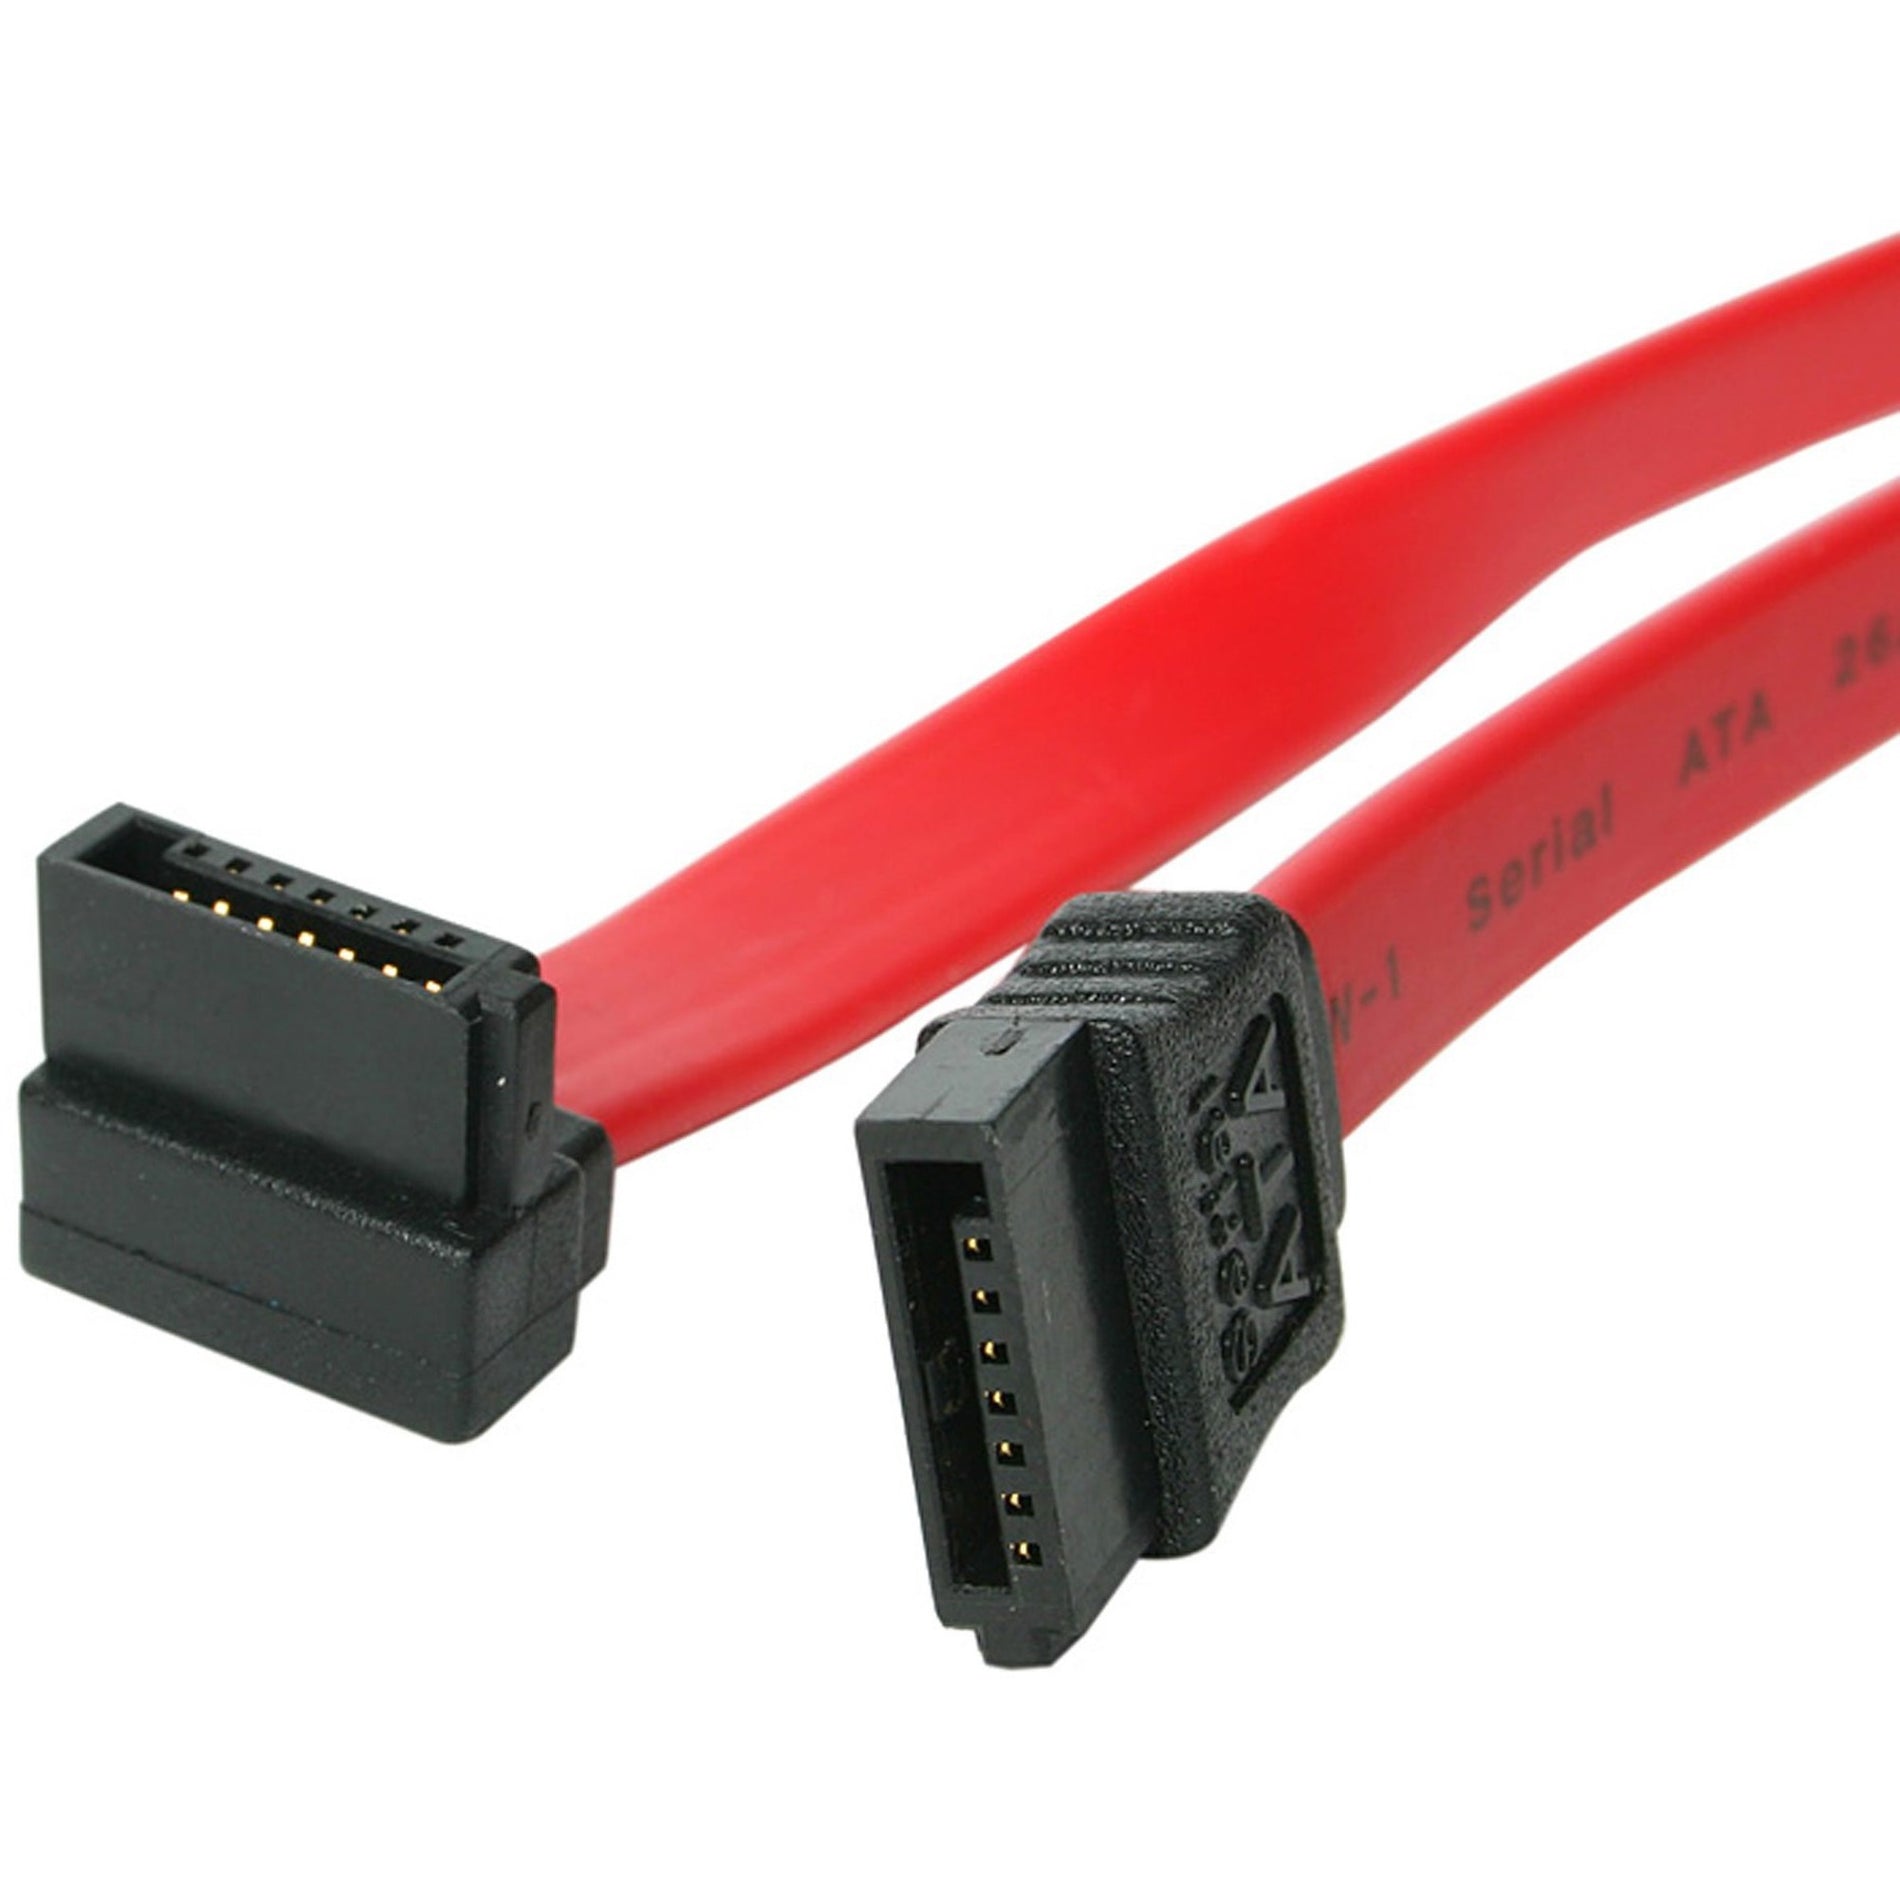 StarTech.com SATA6RA1 6in SATA to Right Angle SATA Serial ATA Cable, Flexible and Shielded